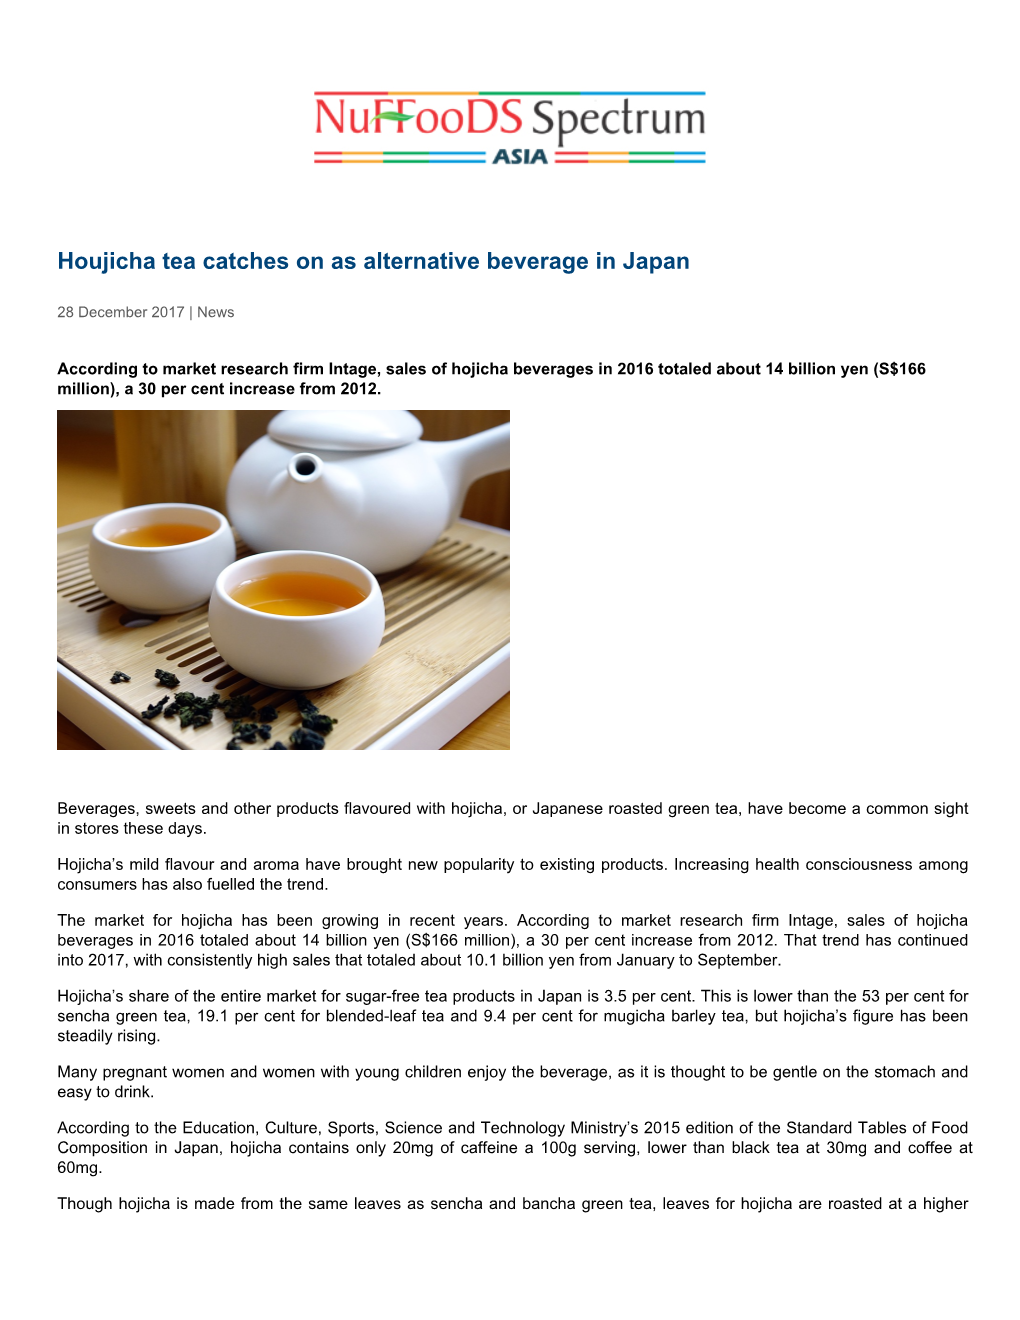 Houjicha Tea Catches on As Alternative Beverage in Japan